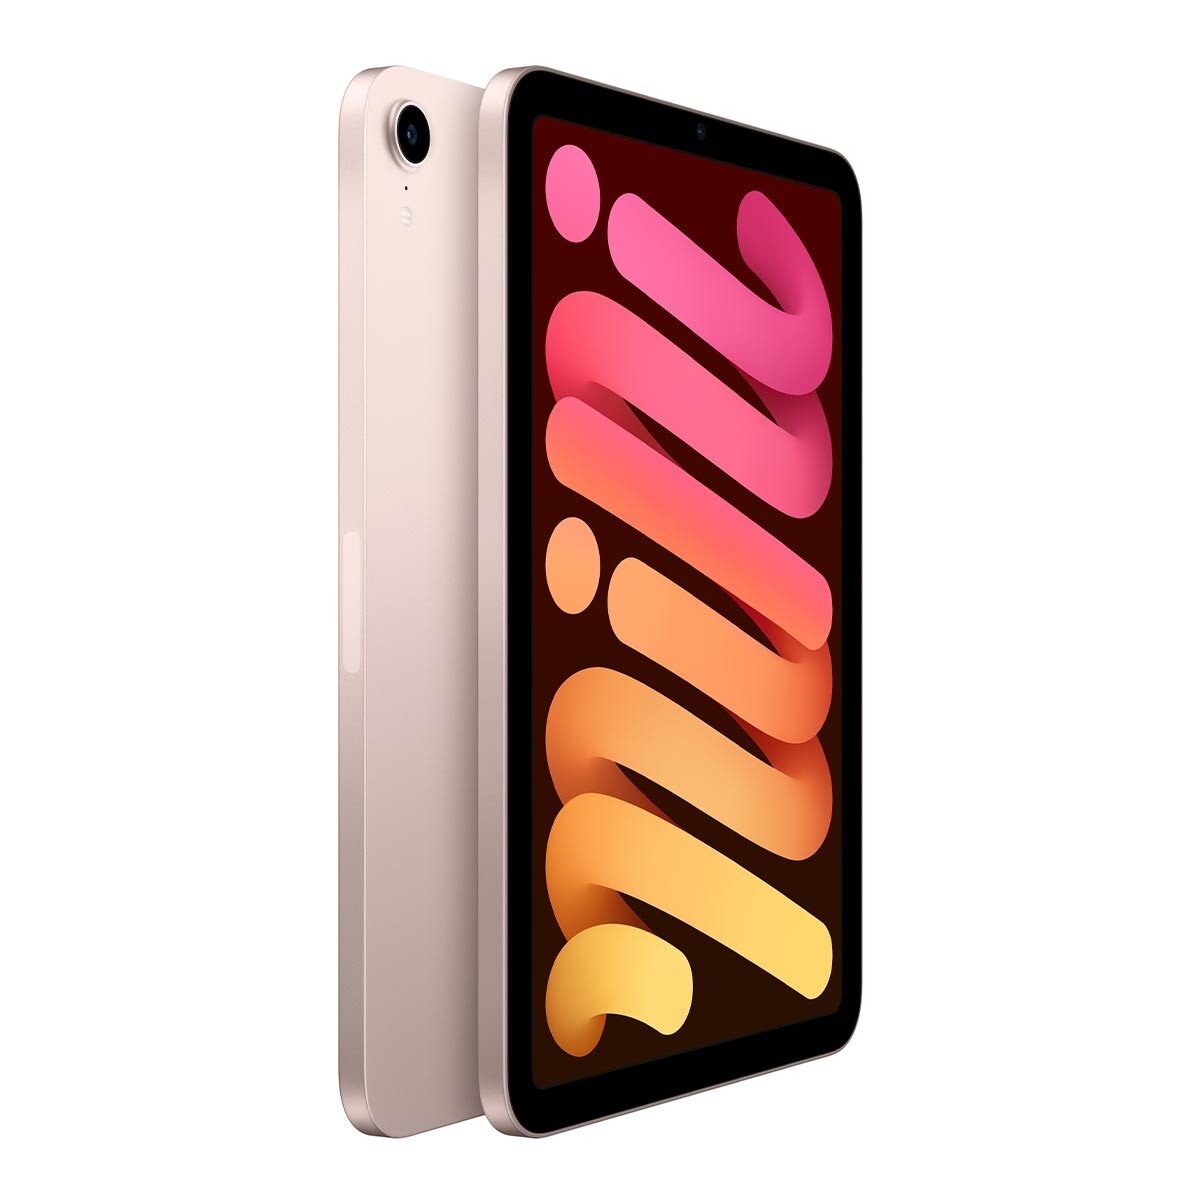 Apple iPad Mini (第6代) 8.3吋 256GB Wi-Fi 粉紅色